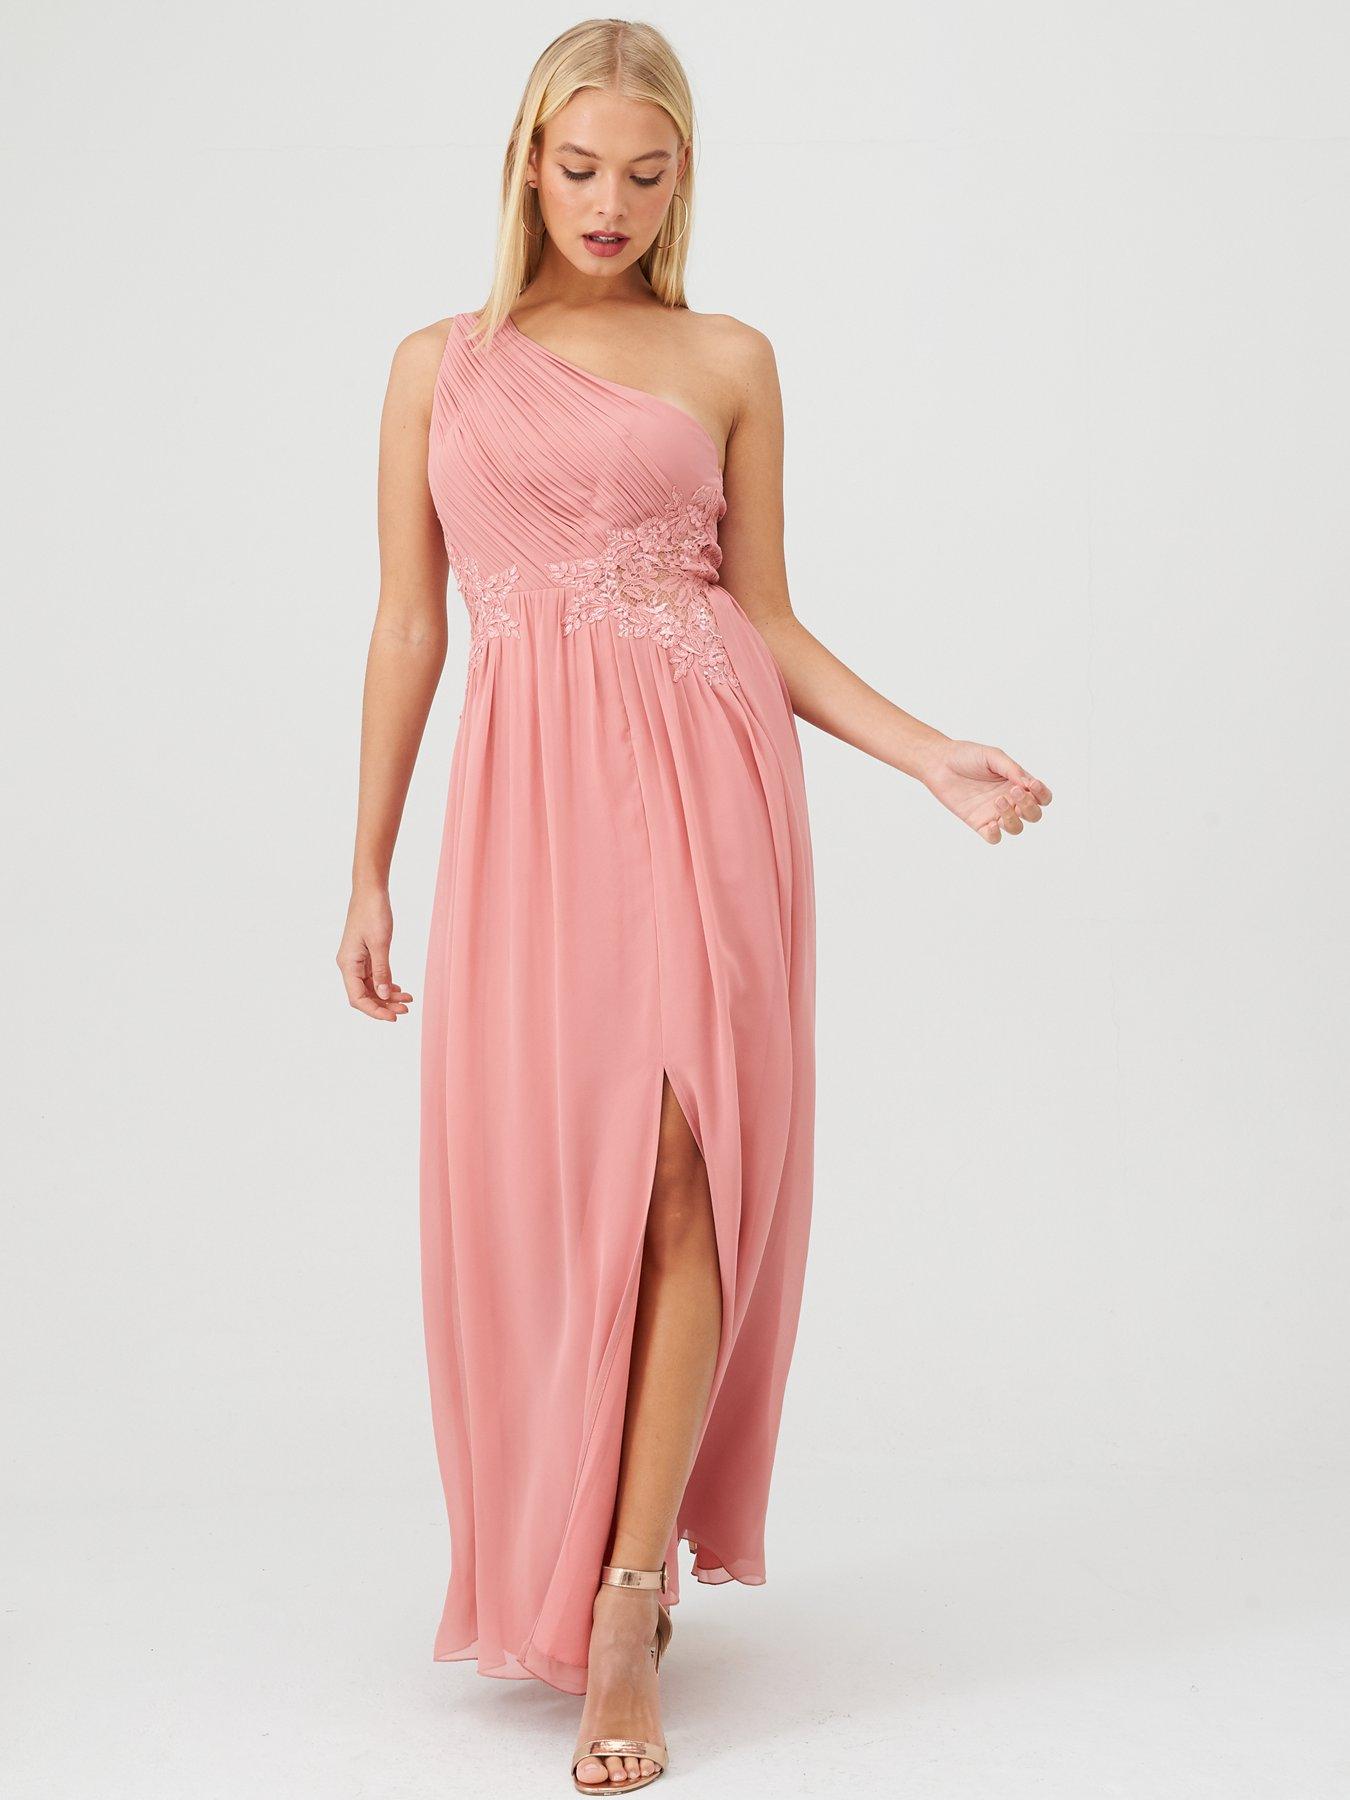 pink embellished bridesmaid dress